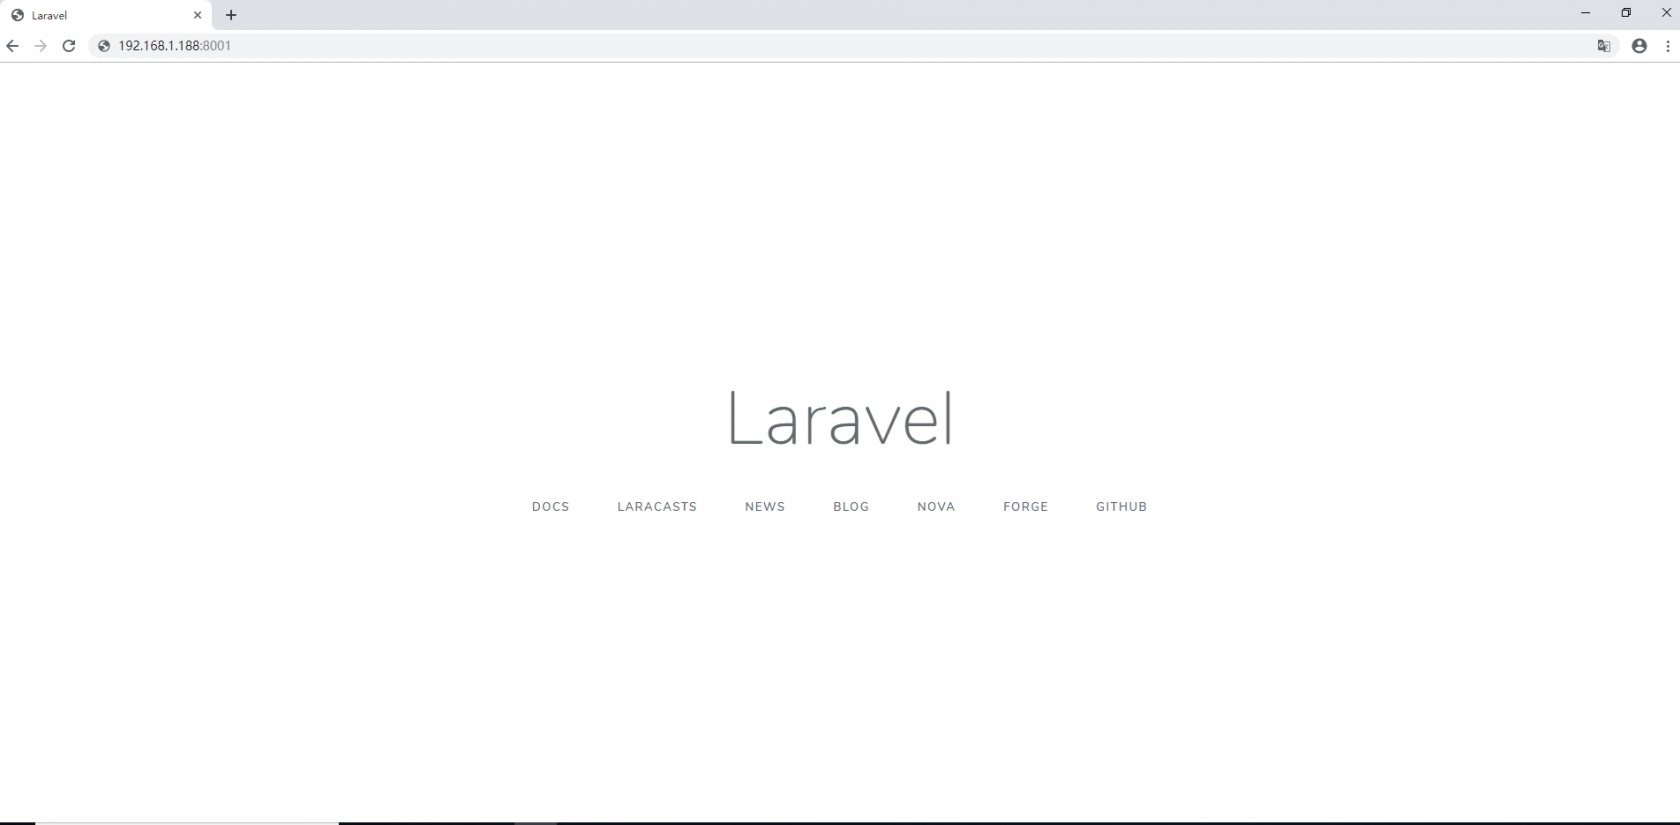 Windows 环境下安装 Laravel